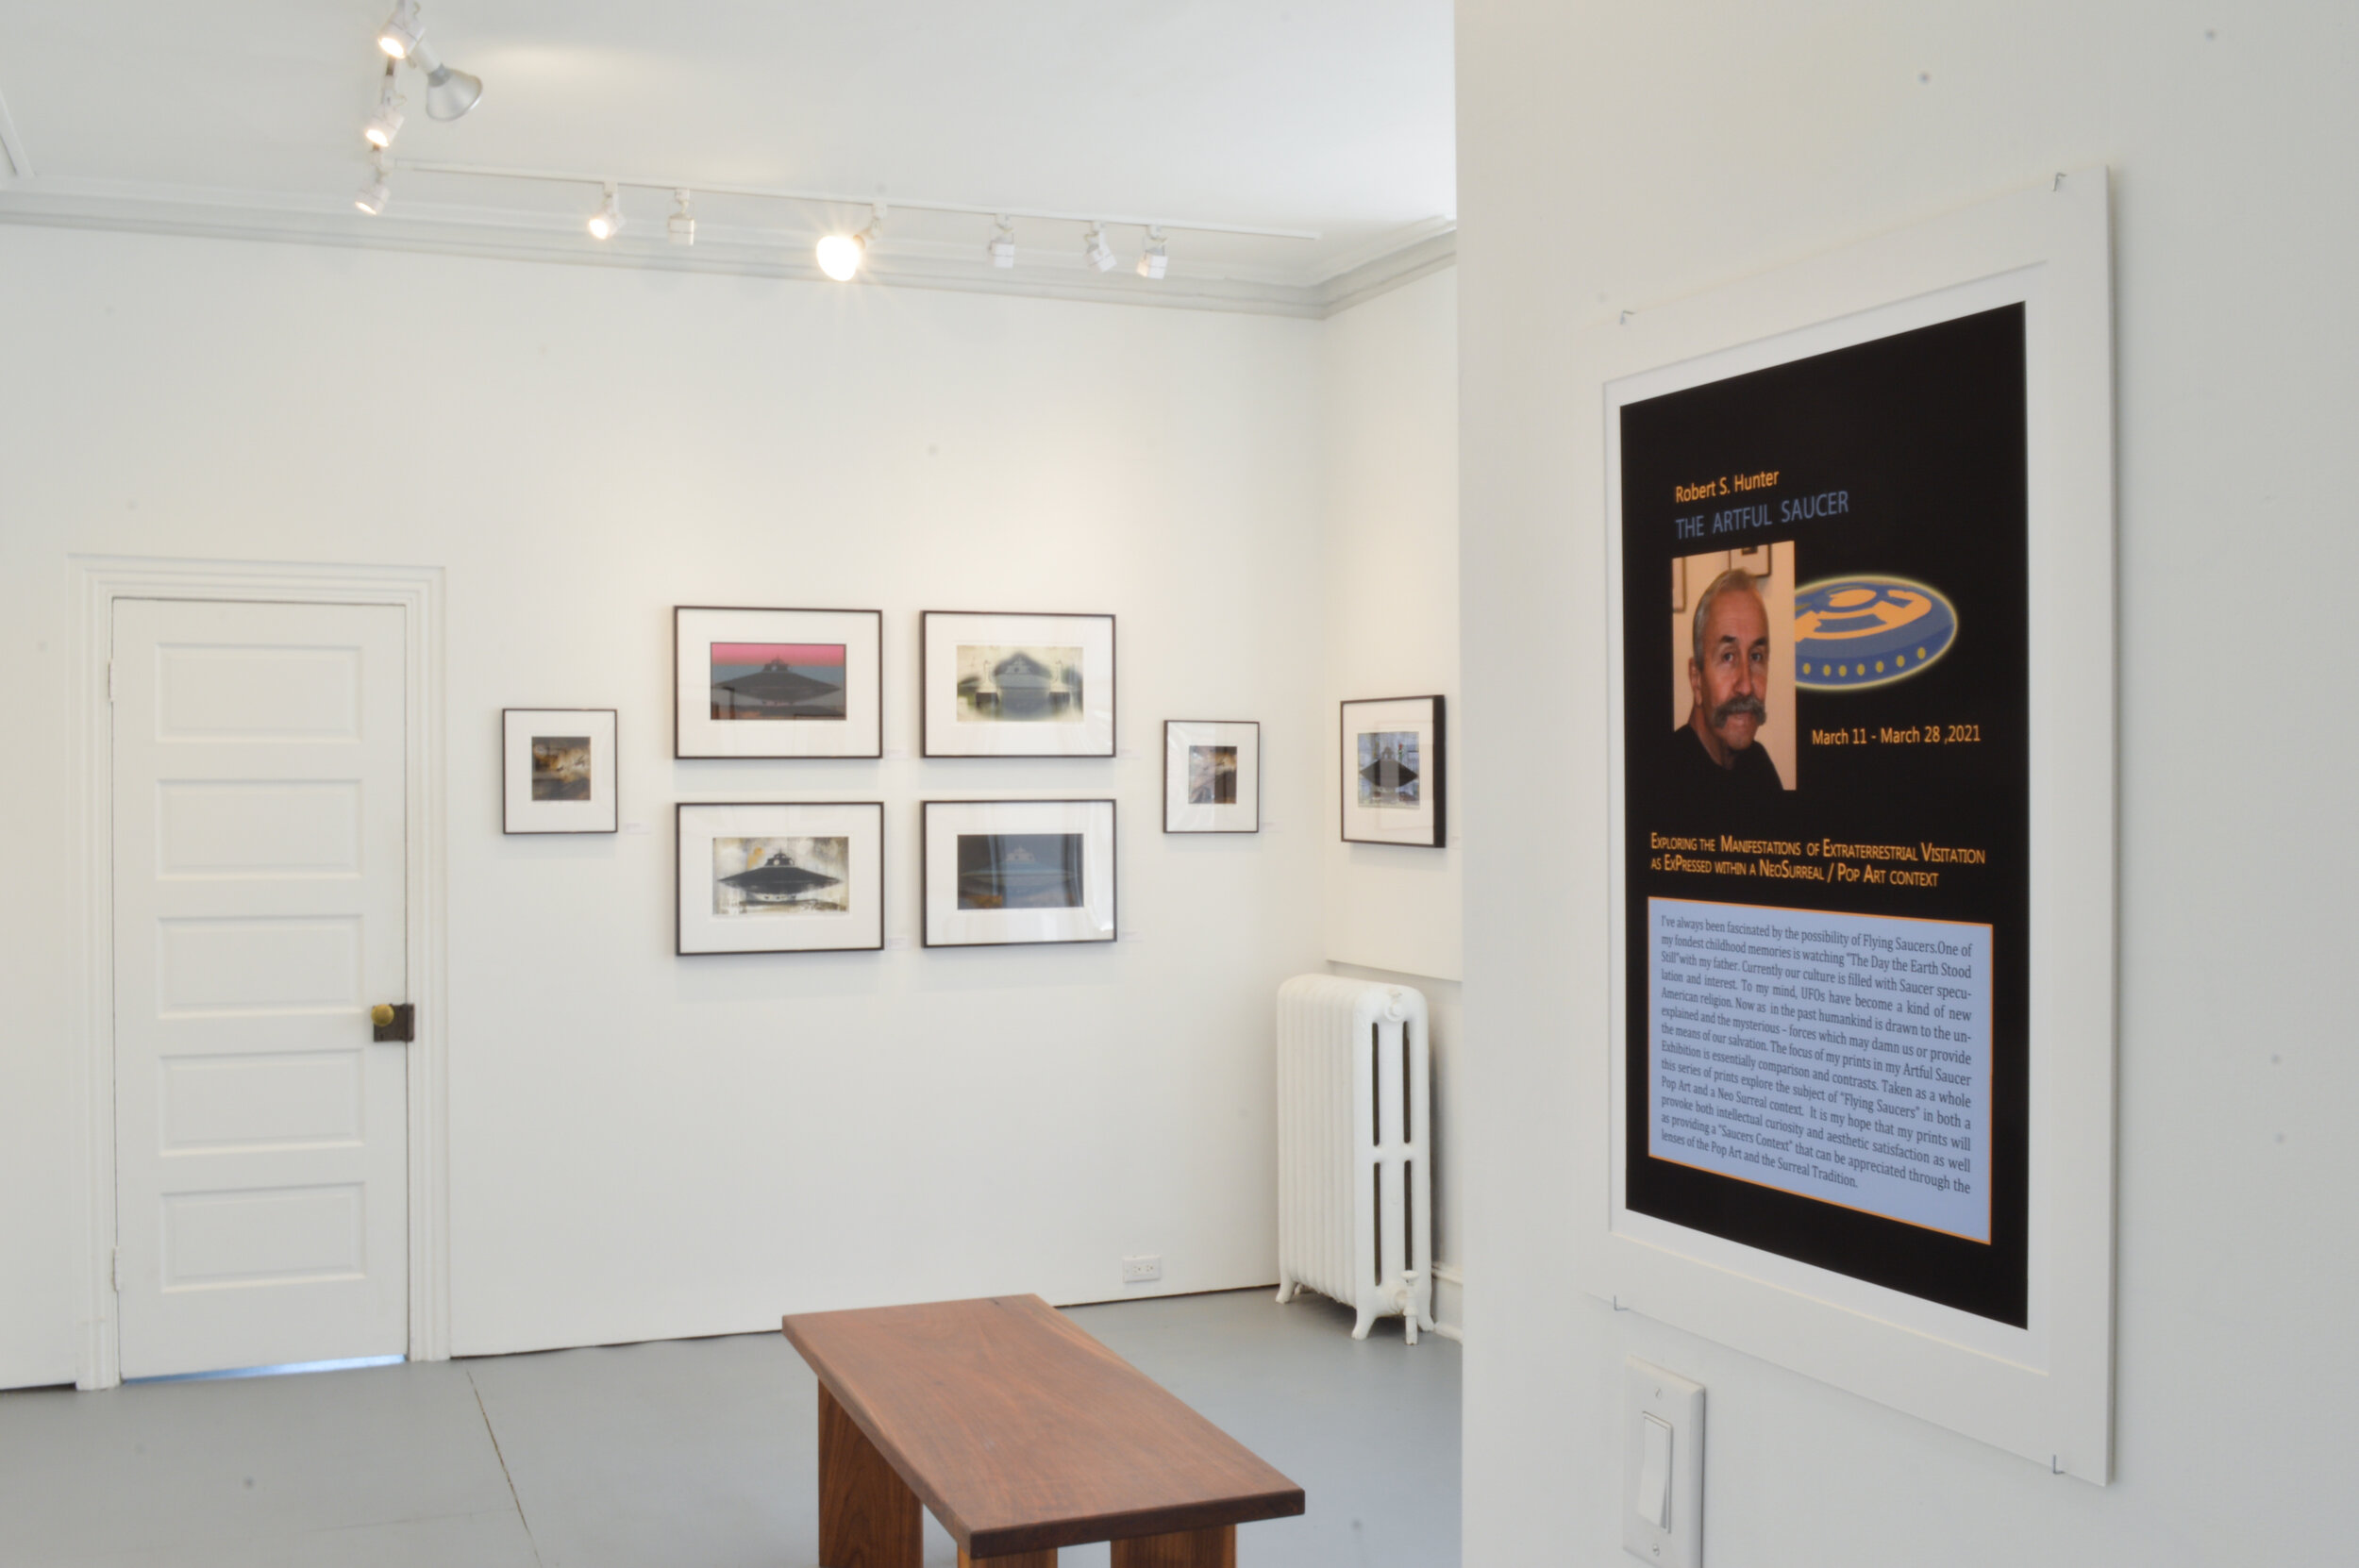 Installation image of The Artful Saucer in Gallery 2 at Da Vinci Art Alliance